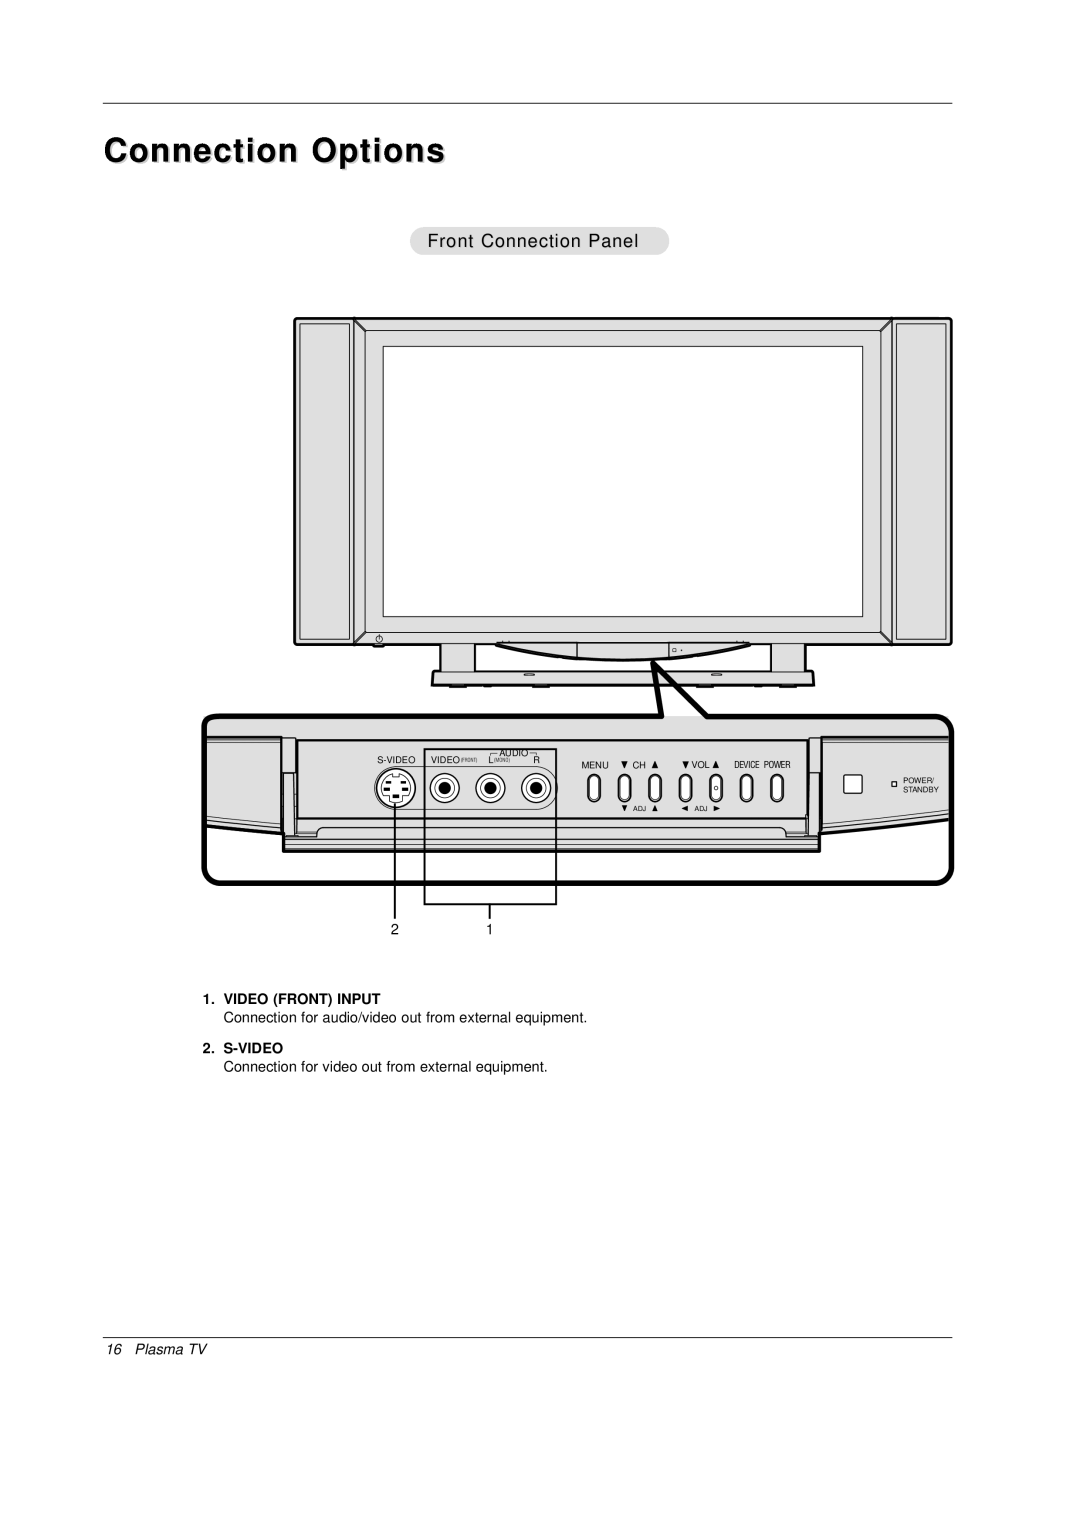 Mitsubishi Electronics PD-4225S manual Connection Options, Video Front Input, S-Video, Plasma TV, Audio, Menu, Device Power 